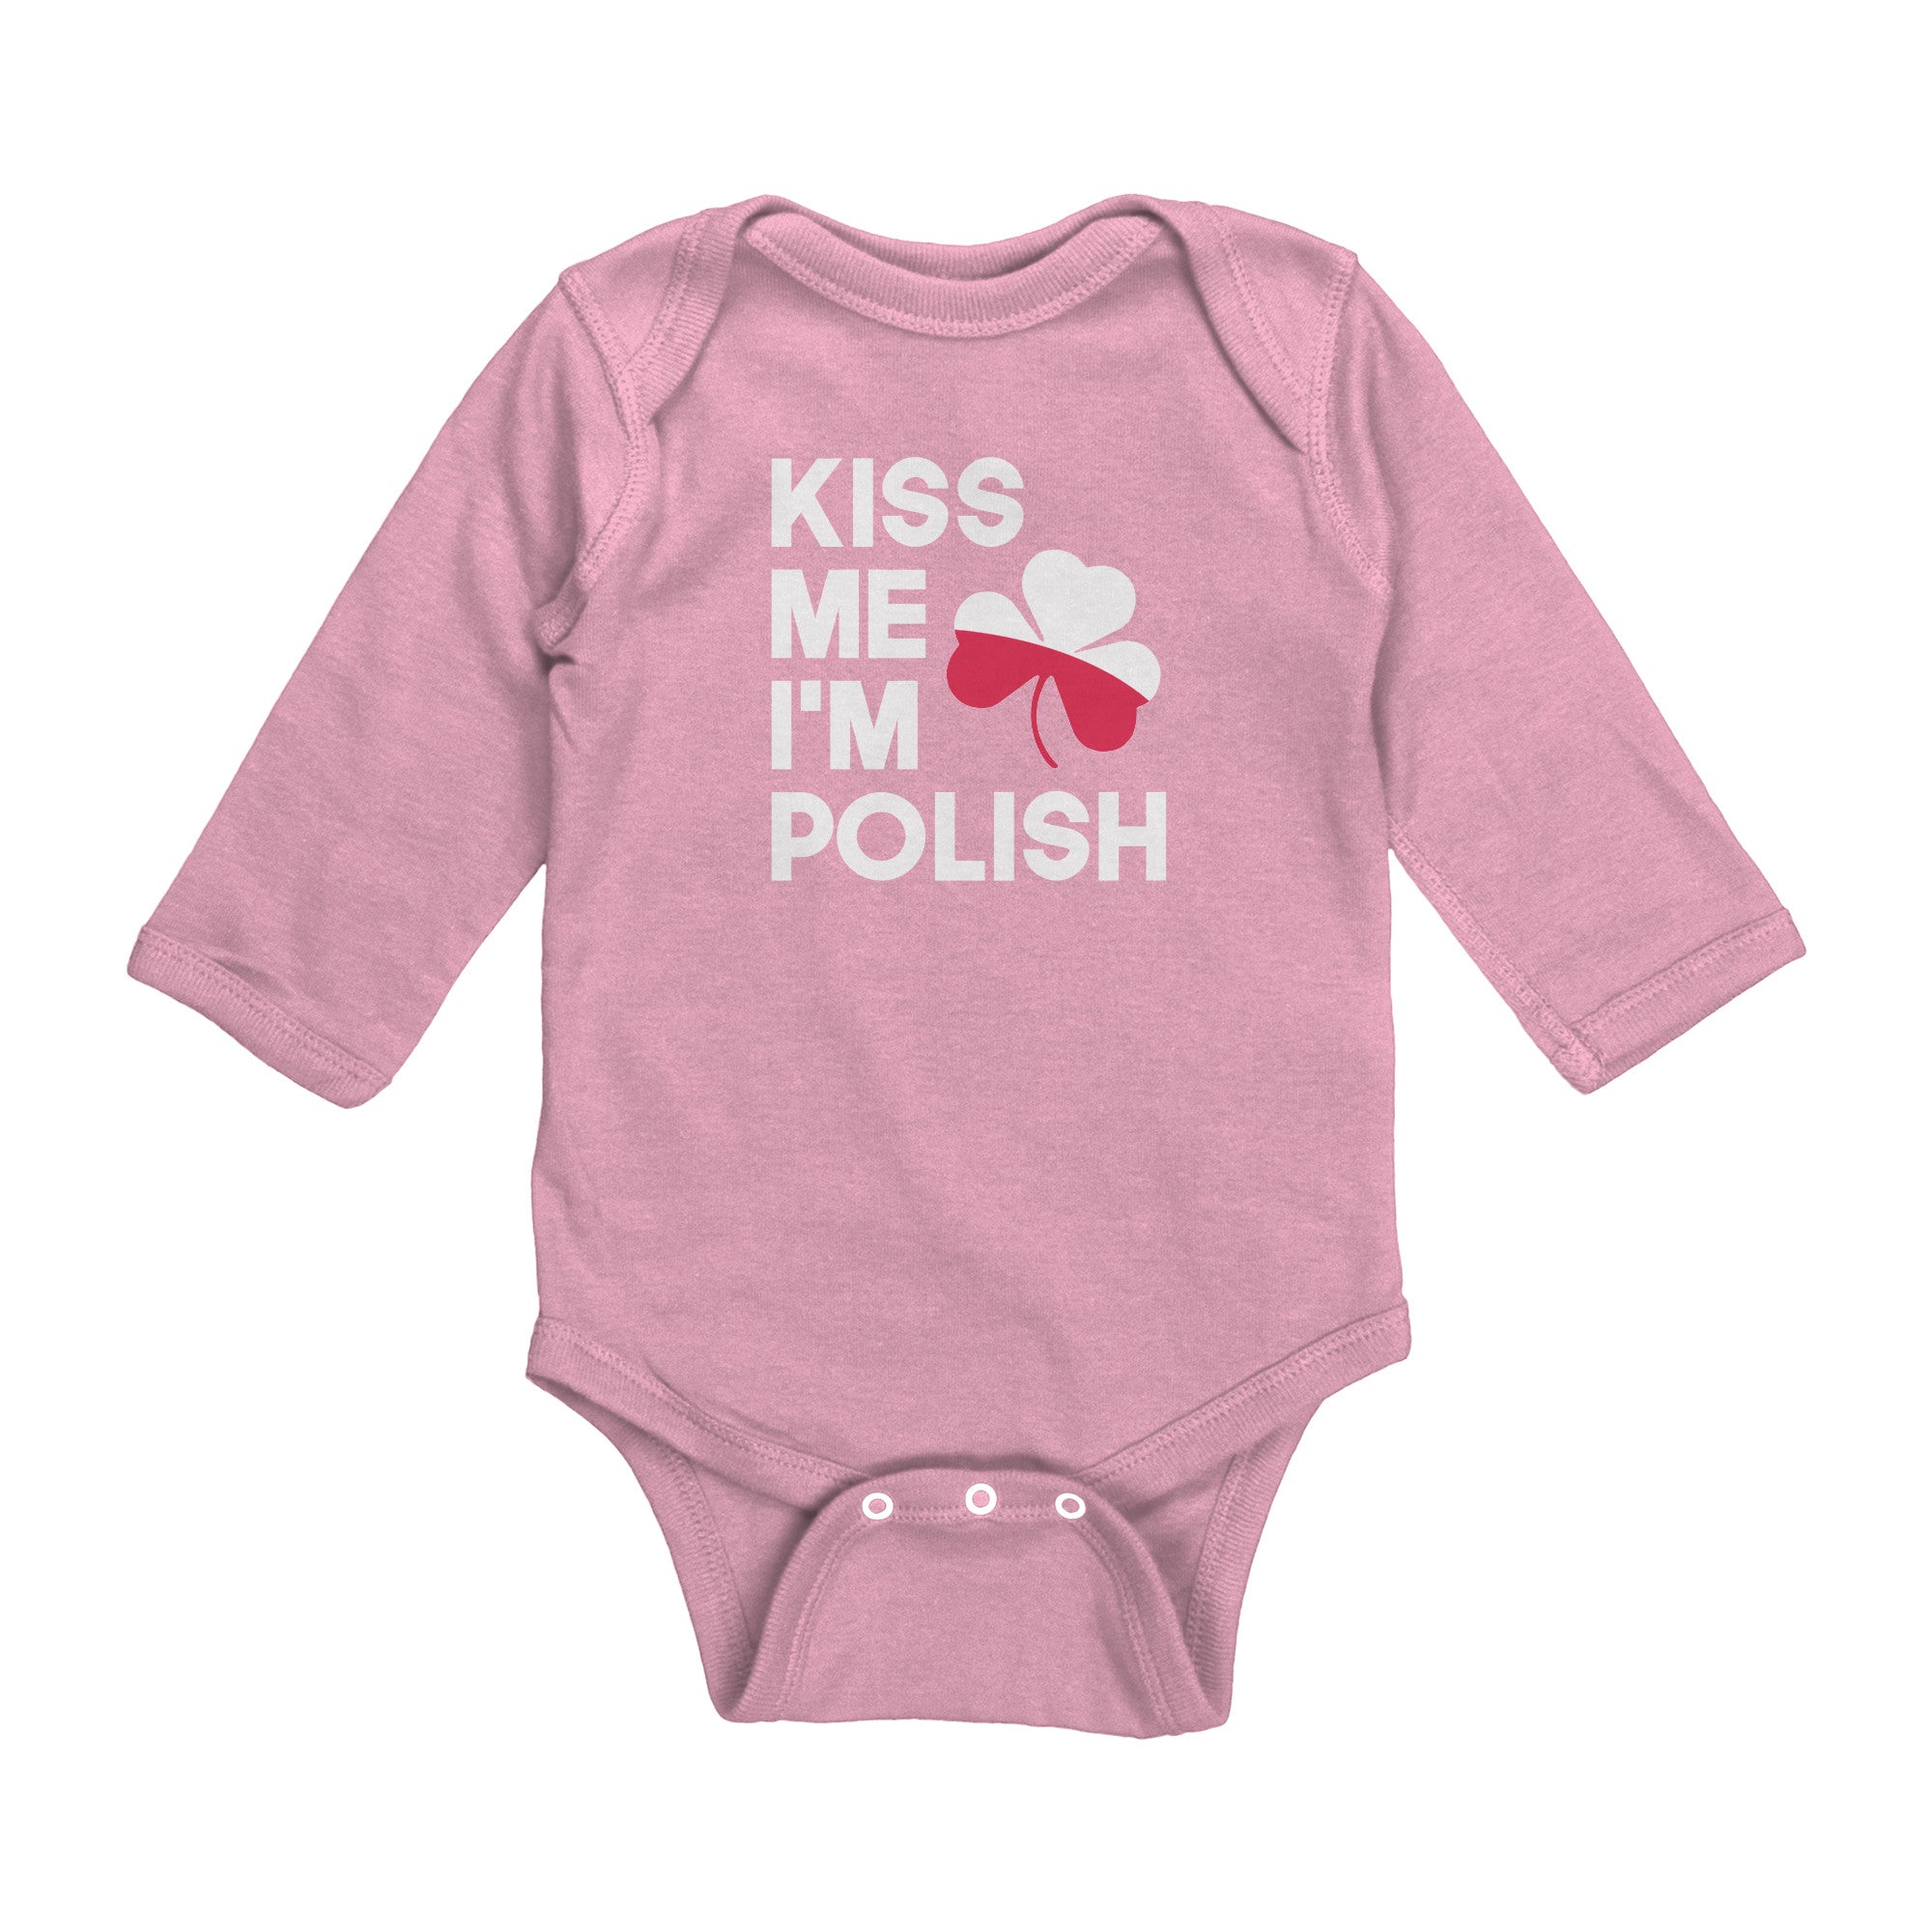 Kiss me I'm polish baby bodysuit long sleeve – My Polish Heritage